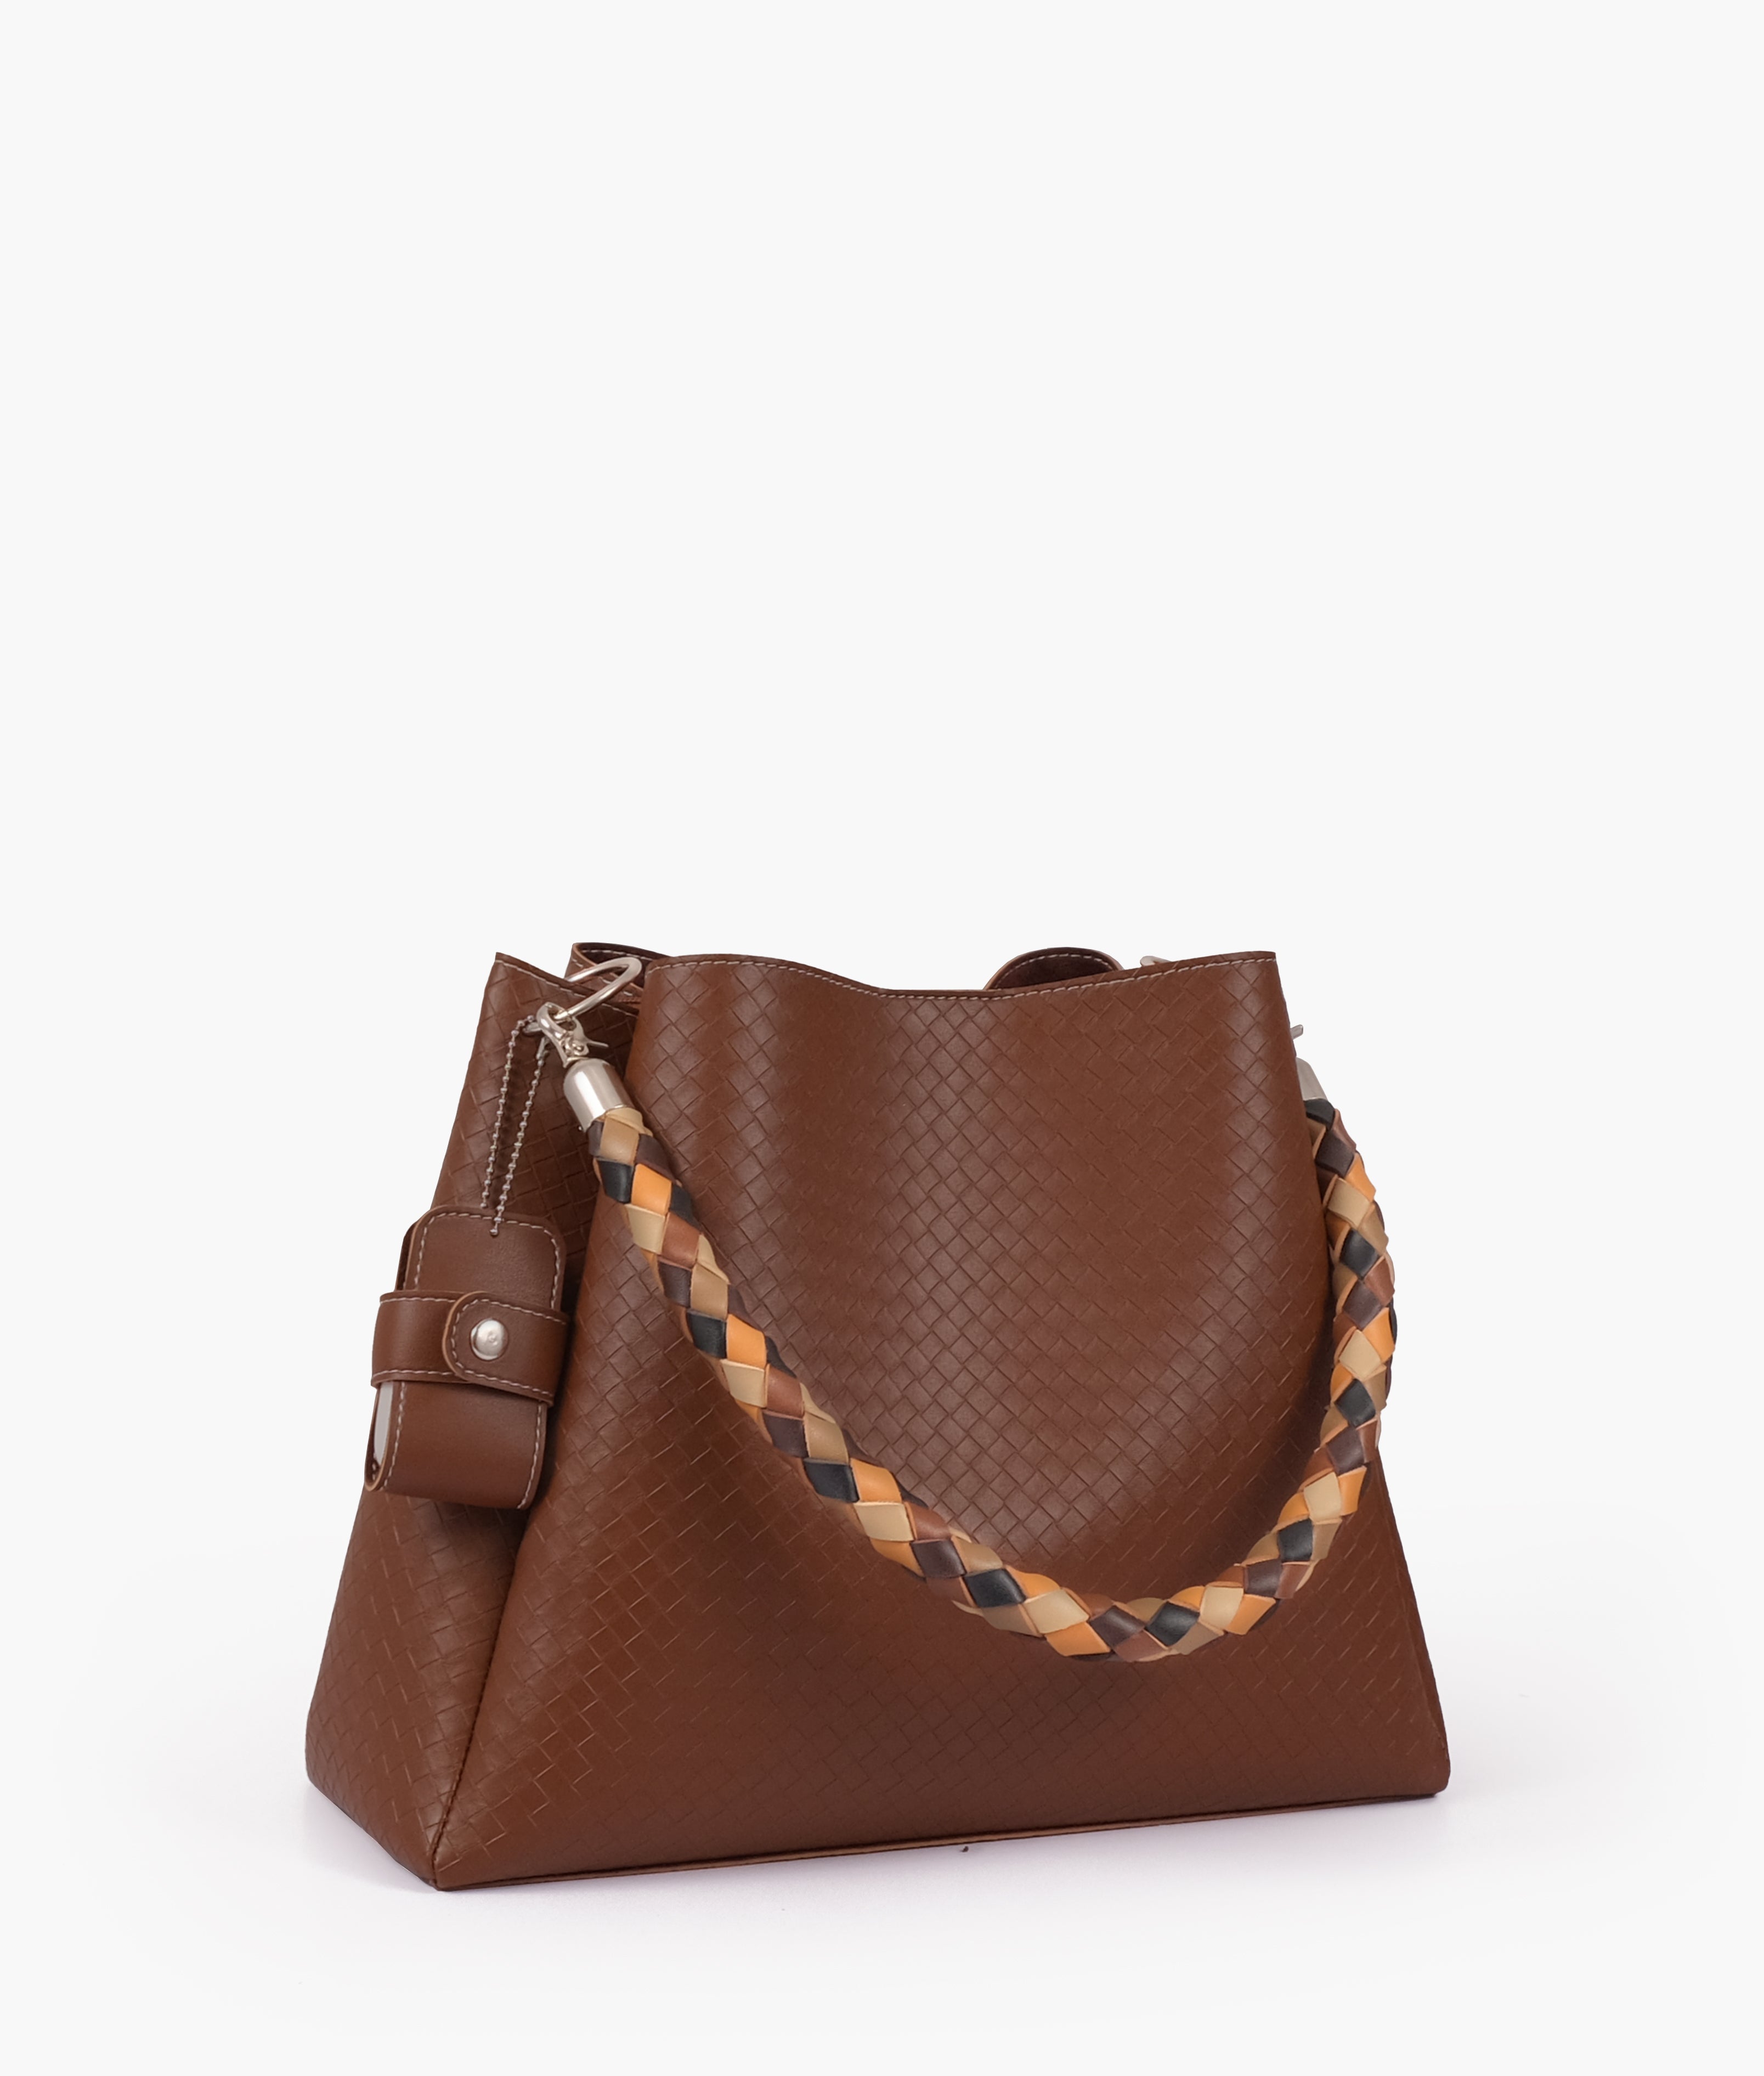 Brown weaved handbag with braided handle